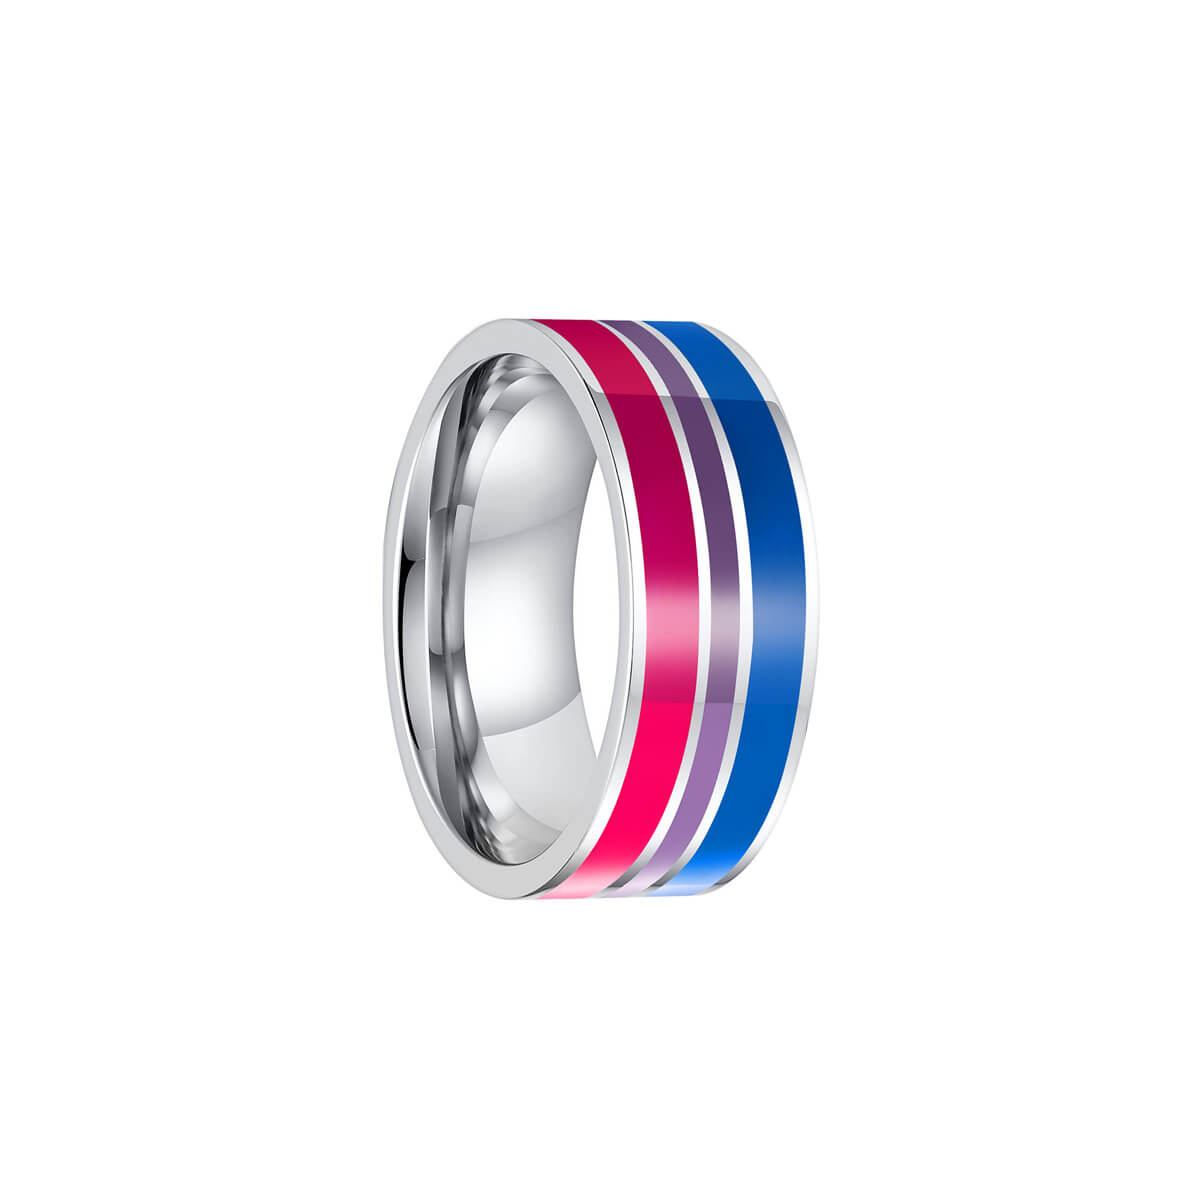 Pride ring striped steel ring 8mm (steel 316L)